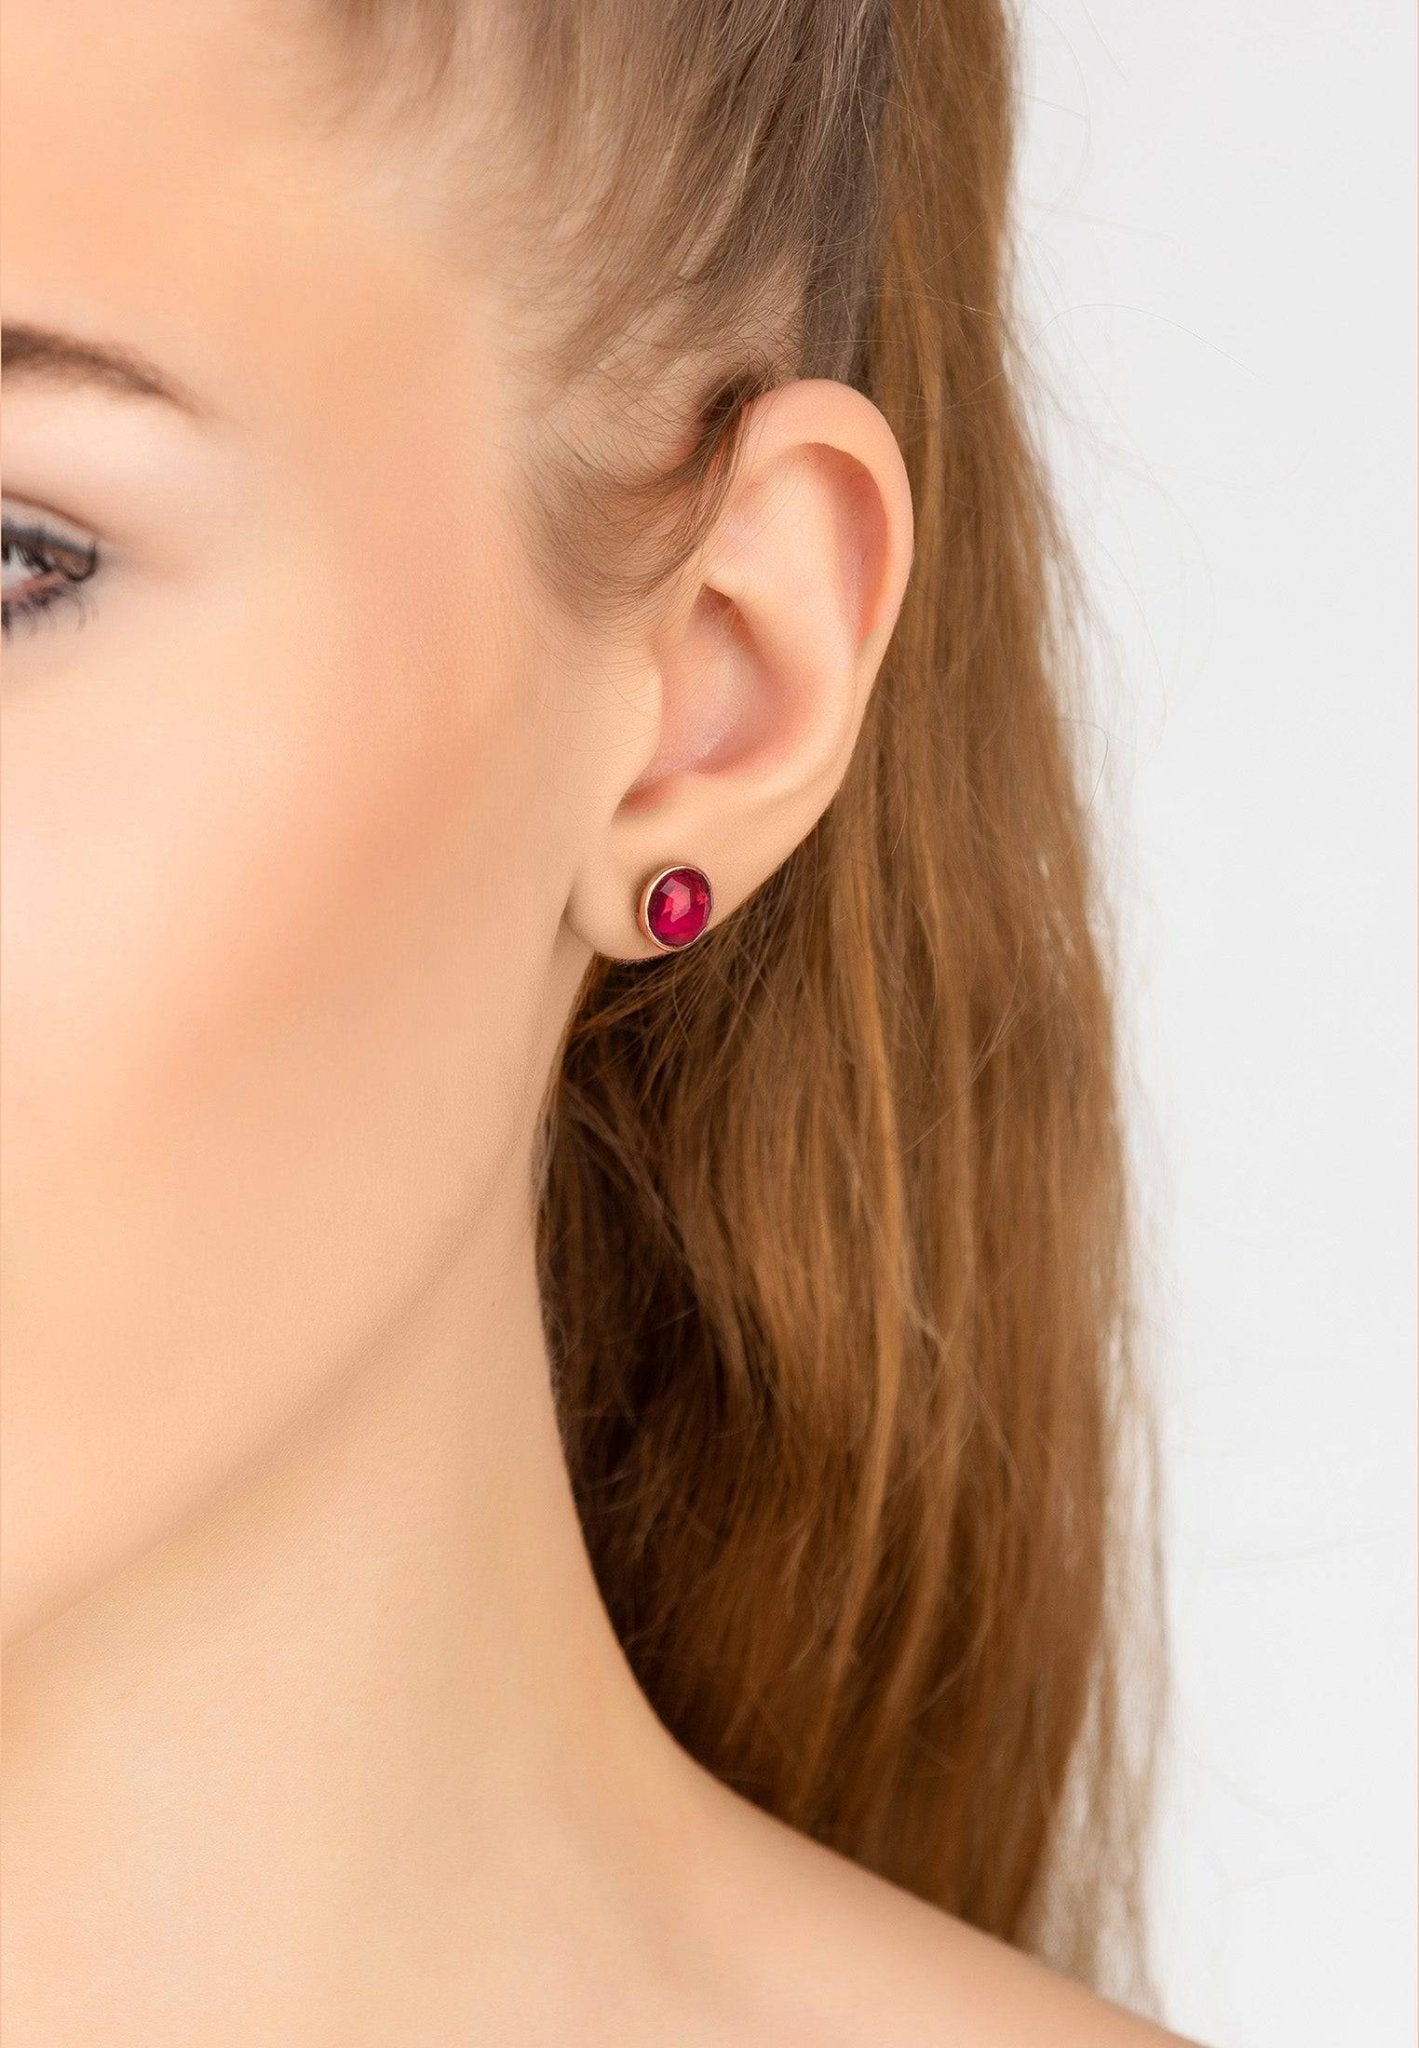 Medium Circle Gemstone Earrings Rosegold Pink Tourmaline - LATELITA Earrings